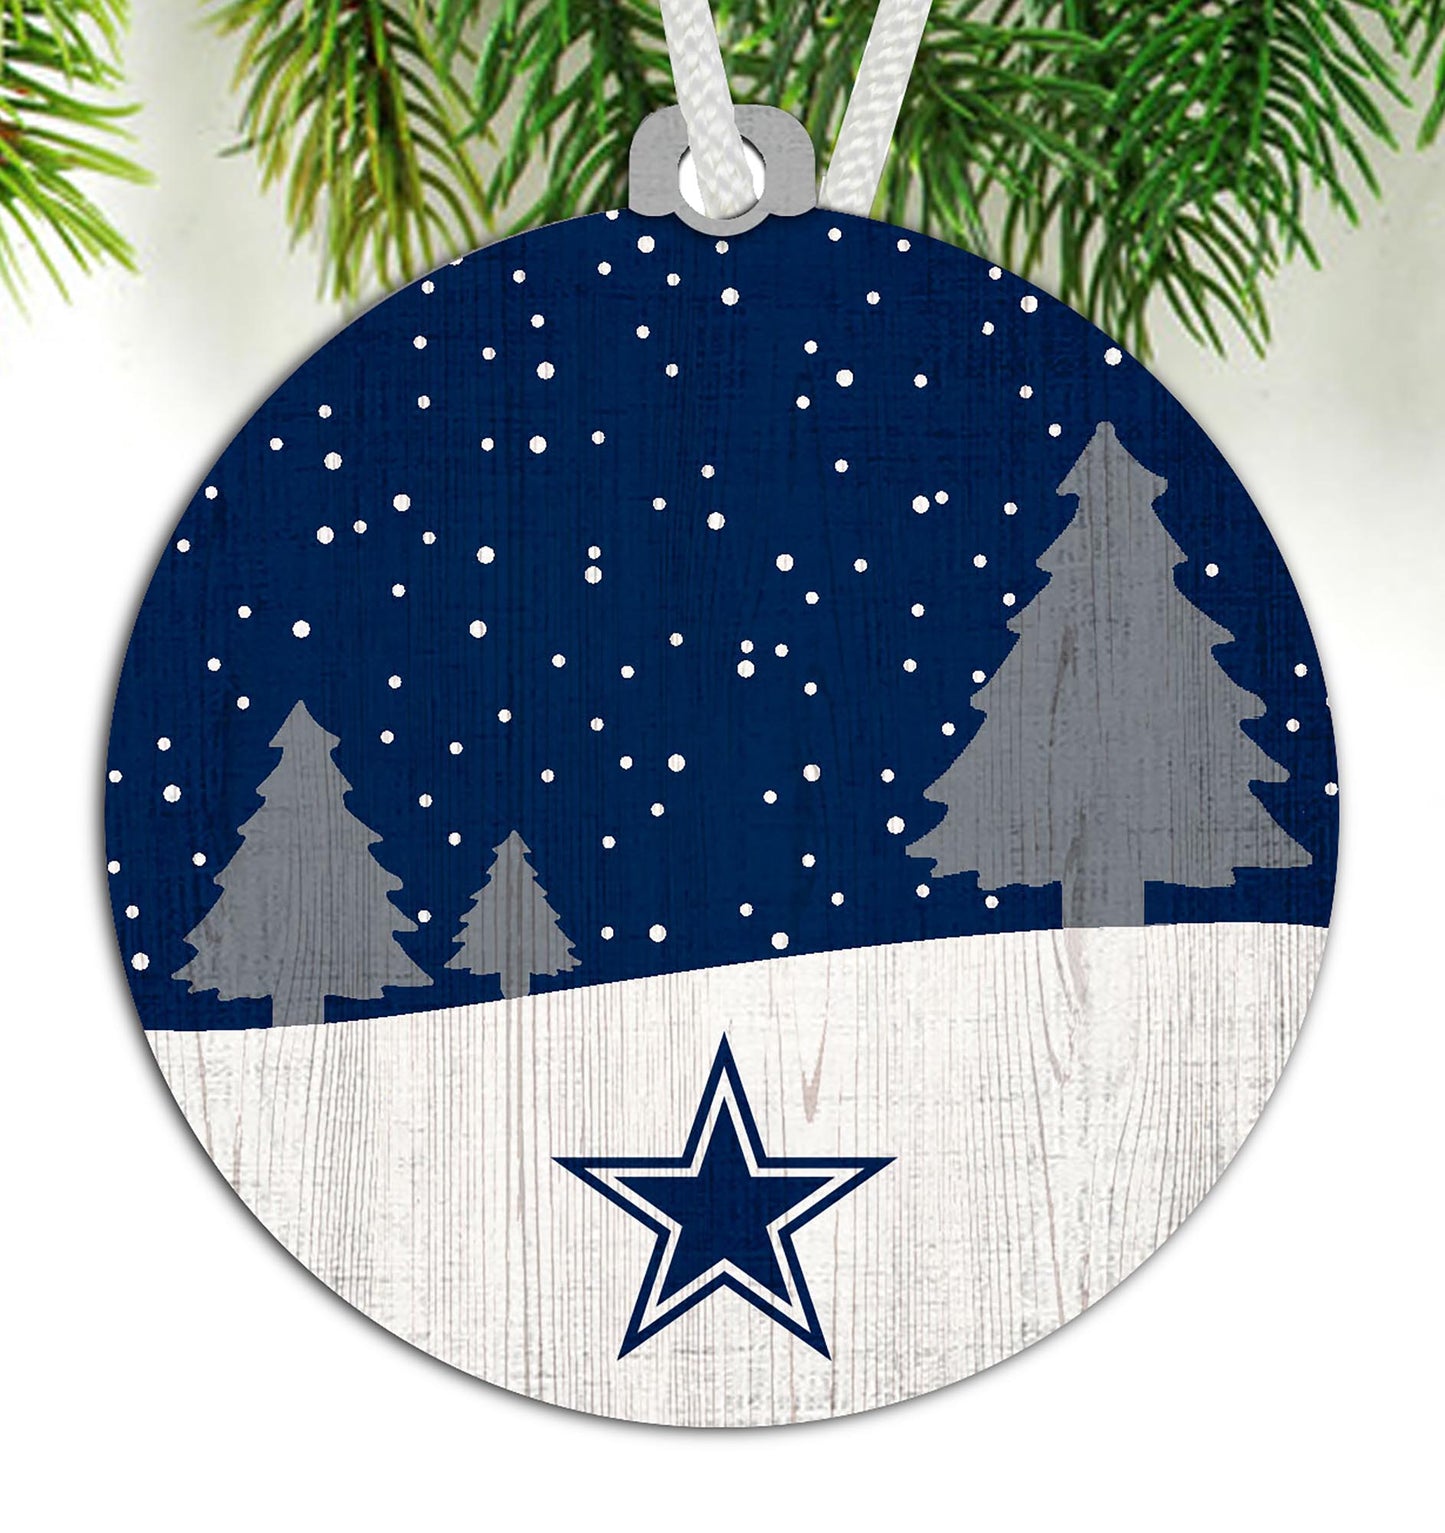 Dallas Cowboys Snow Scene Ornament by Fan Creations